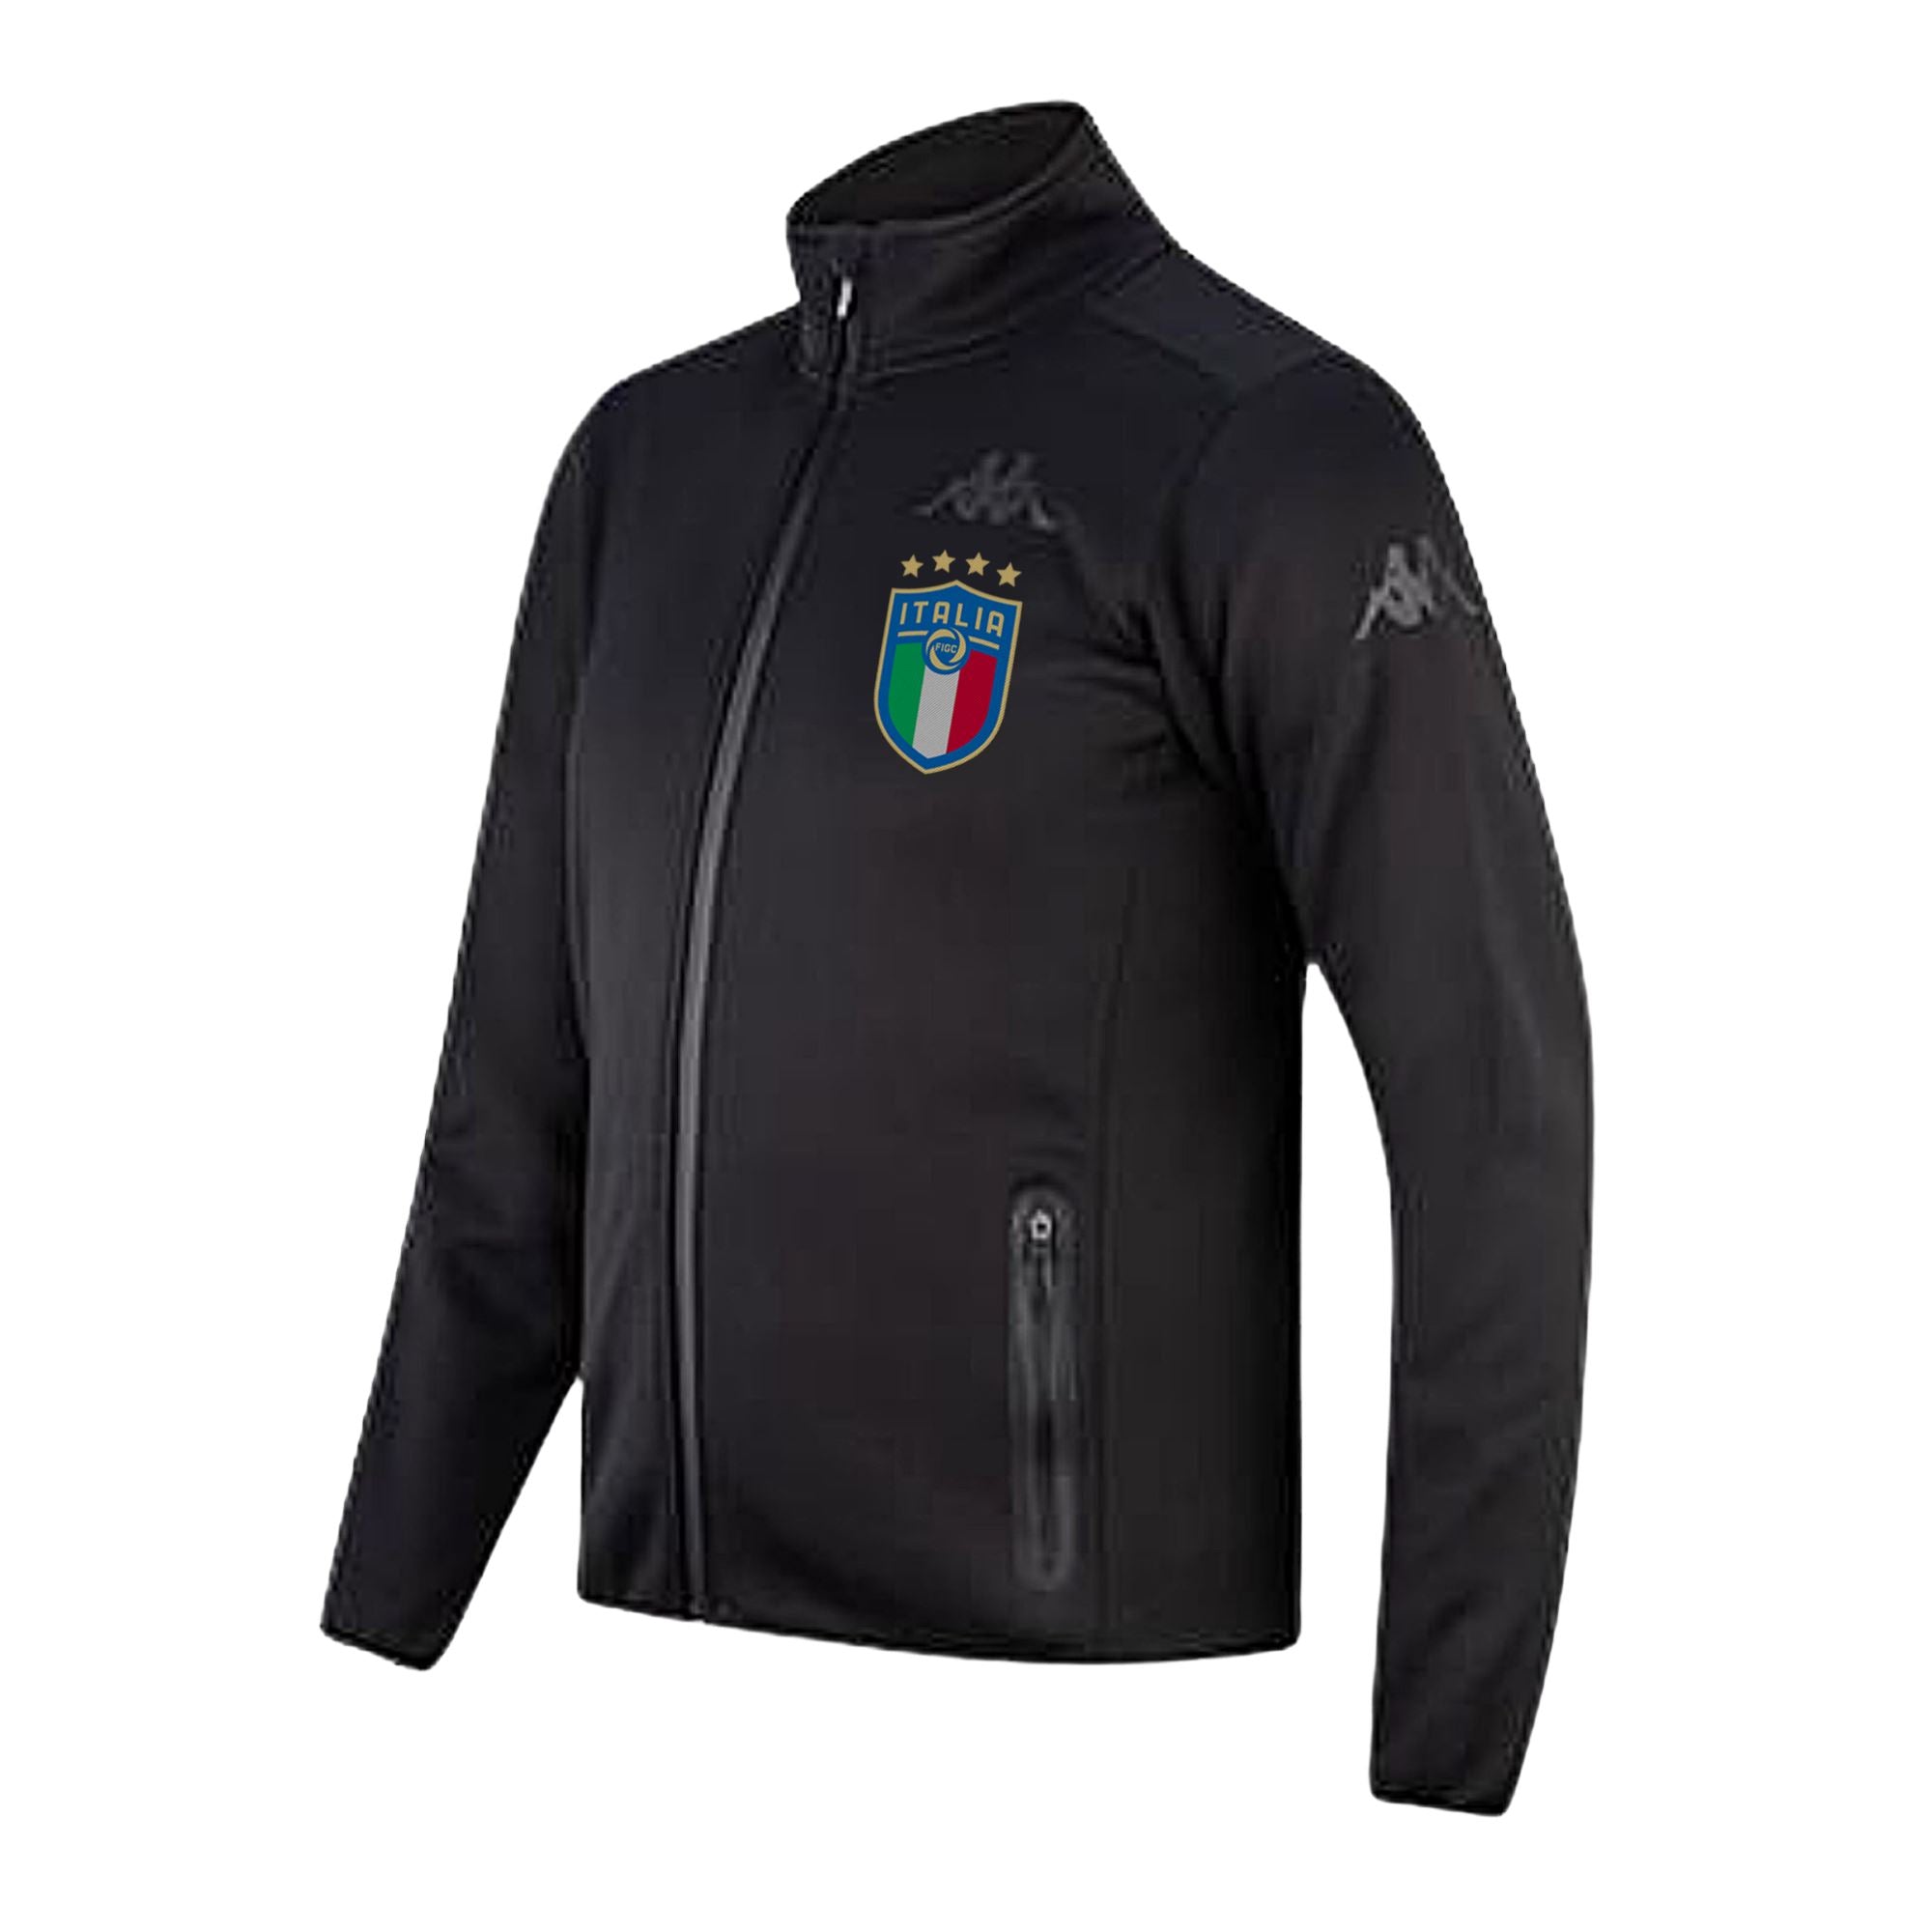 Kappa Italia FIGC Tech Waterproof Jacket - ITASPORT